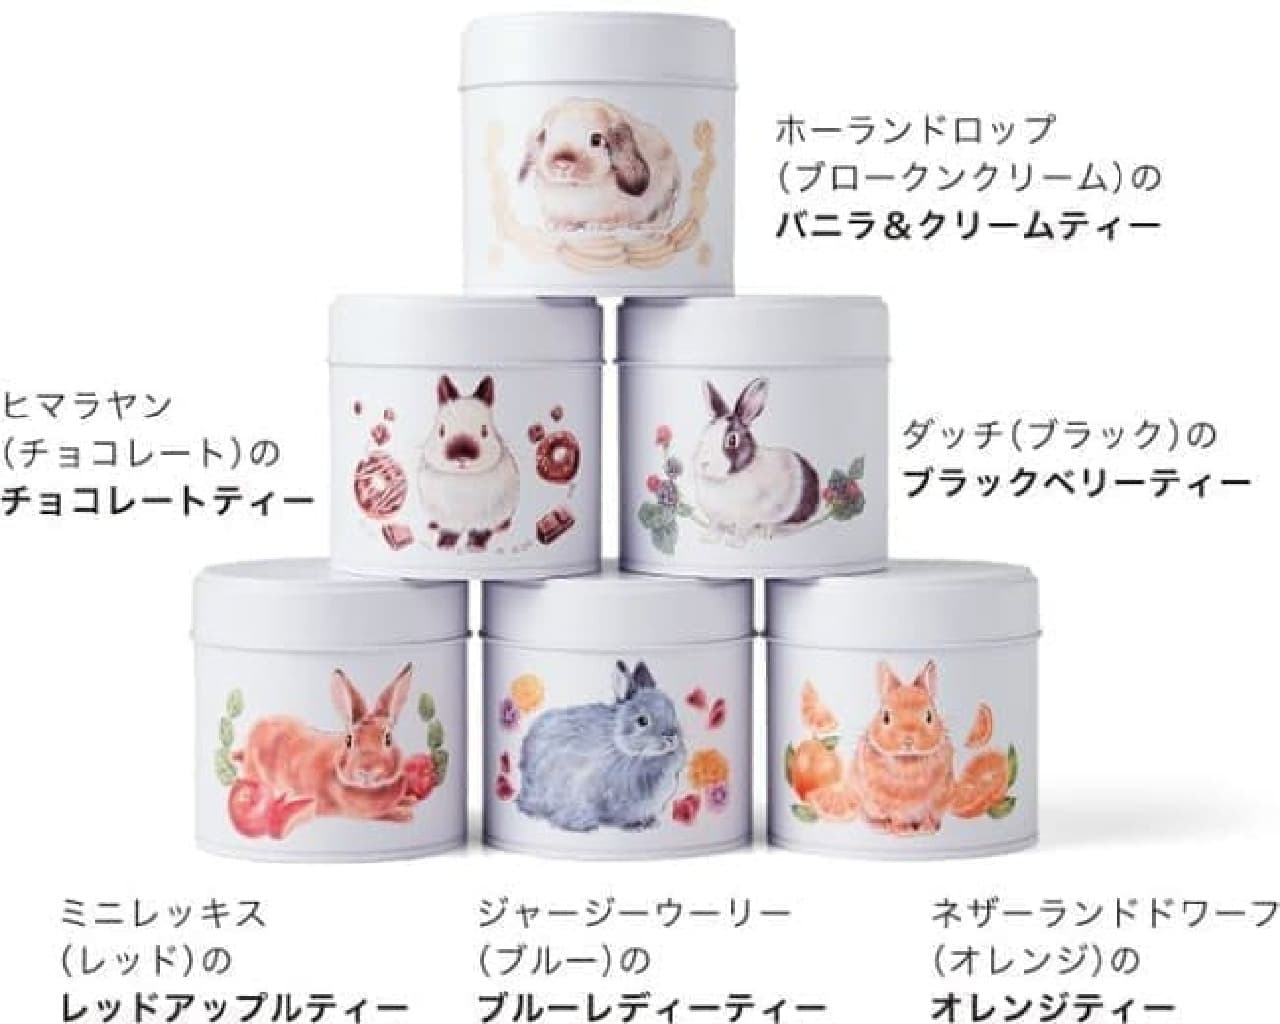 Tea time to enjoy with rabbits ♪ From YOU + MORE! Cute canned tea --Orange tea, vanilla & cream tea, etc.